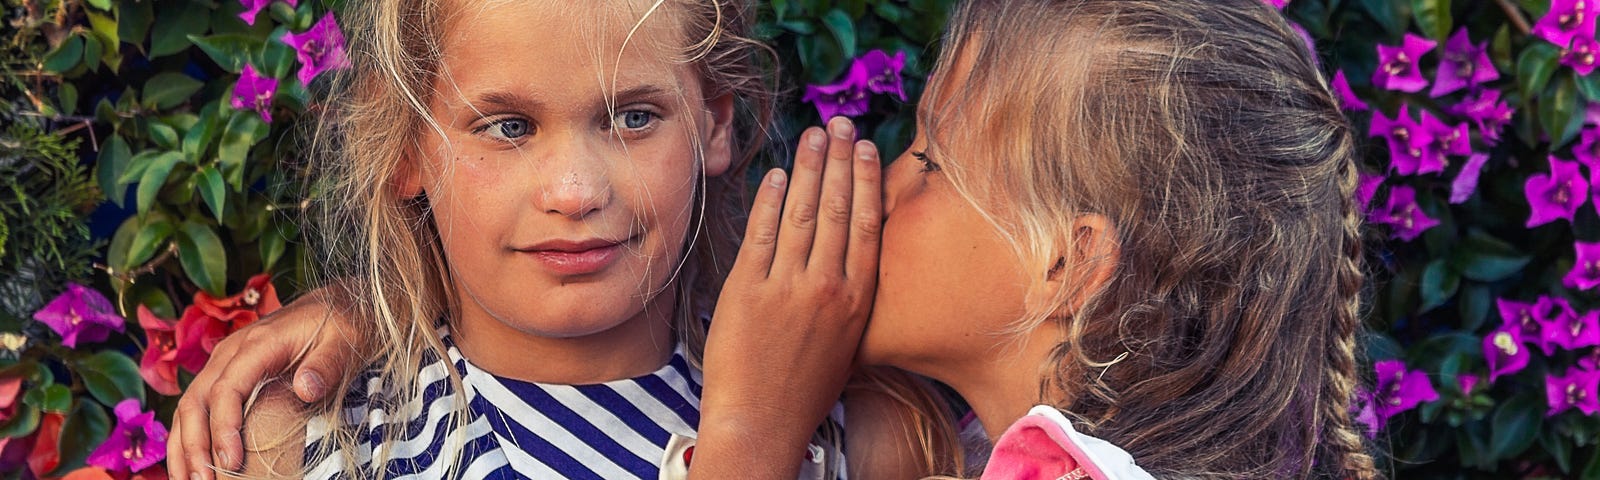 One little girl telling another little girl a secret.